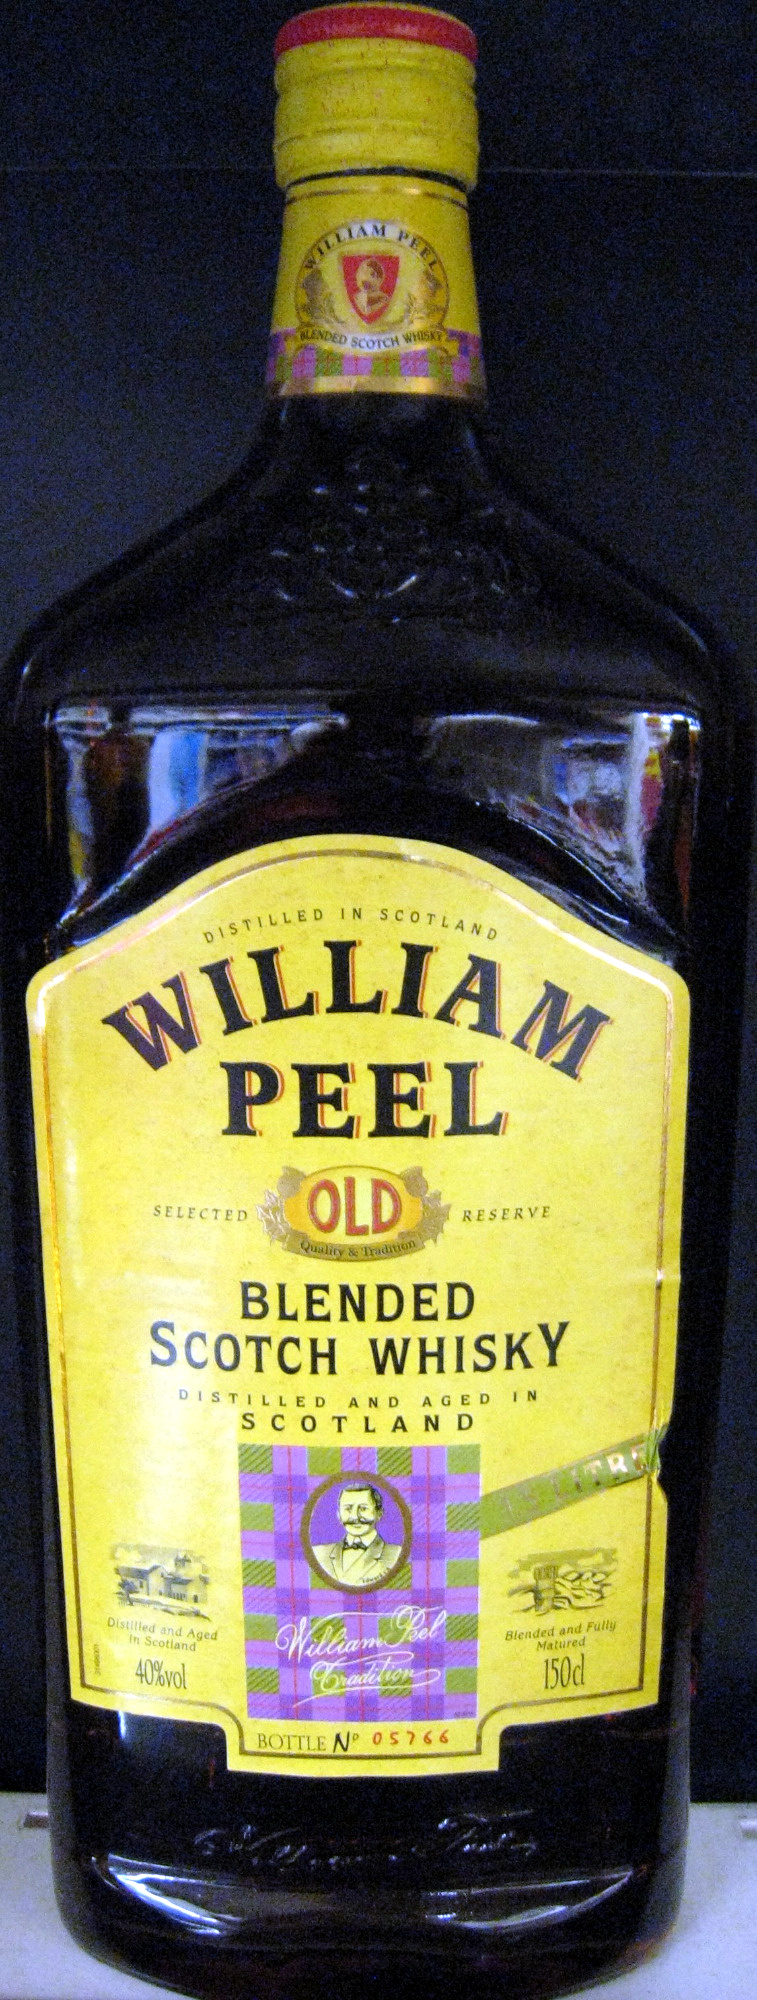 Whisky Ecosse blended sans âge 150 cl William Peel - Produit